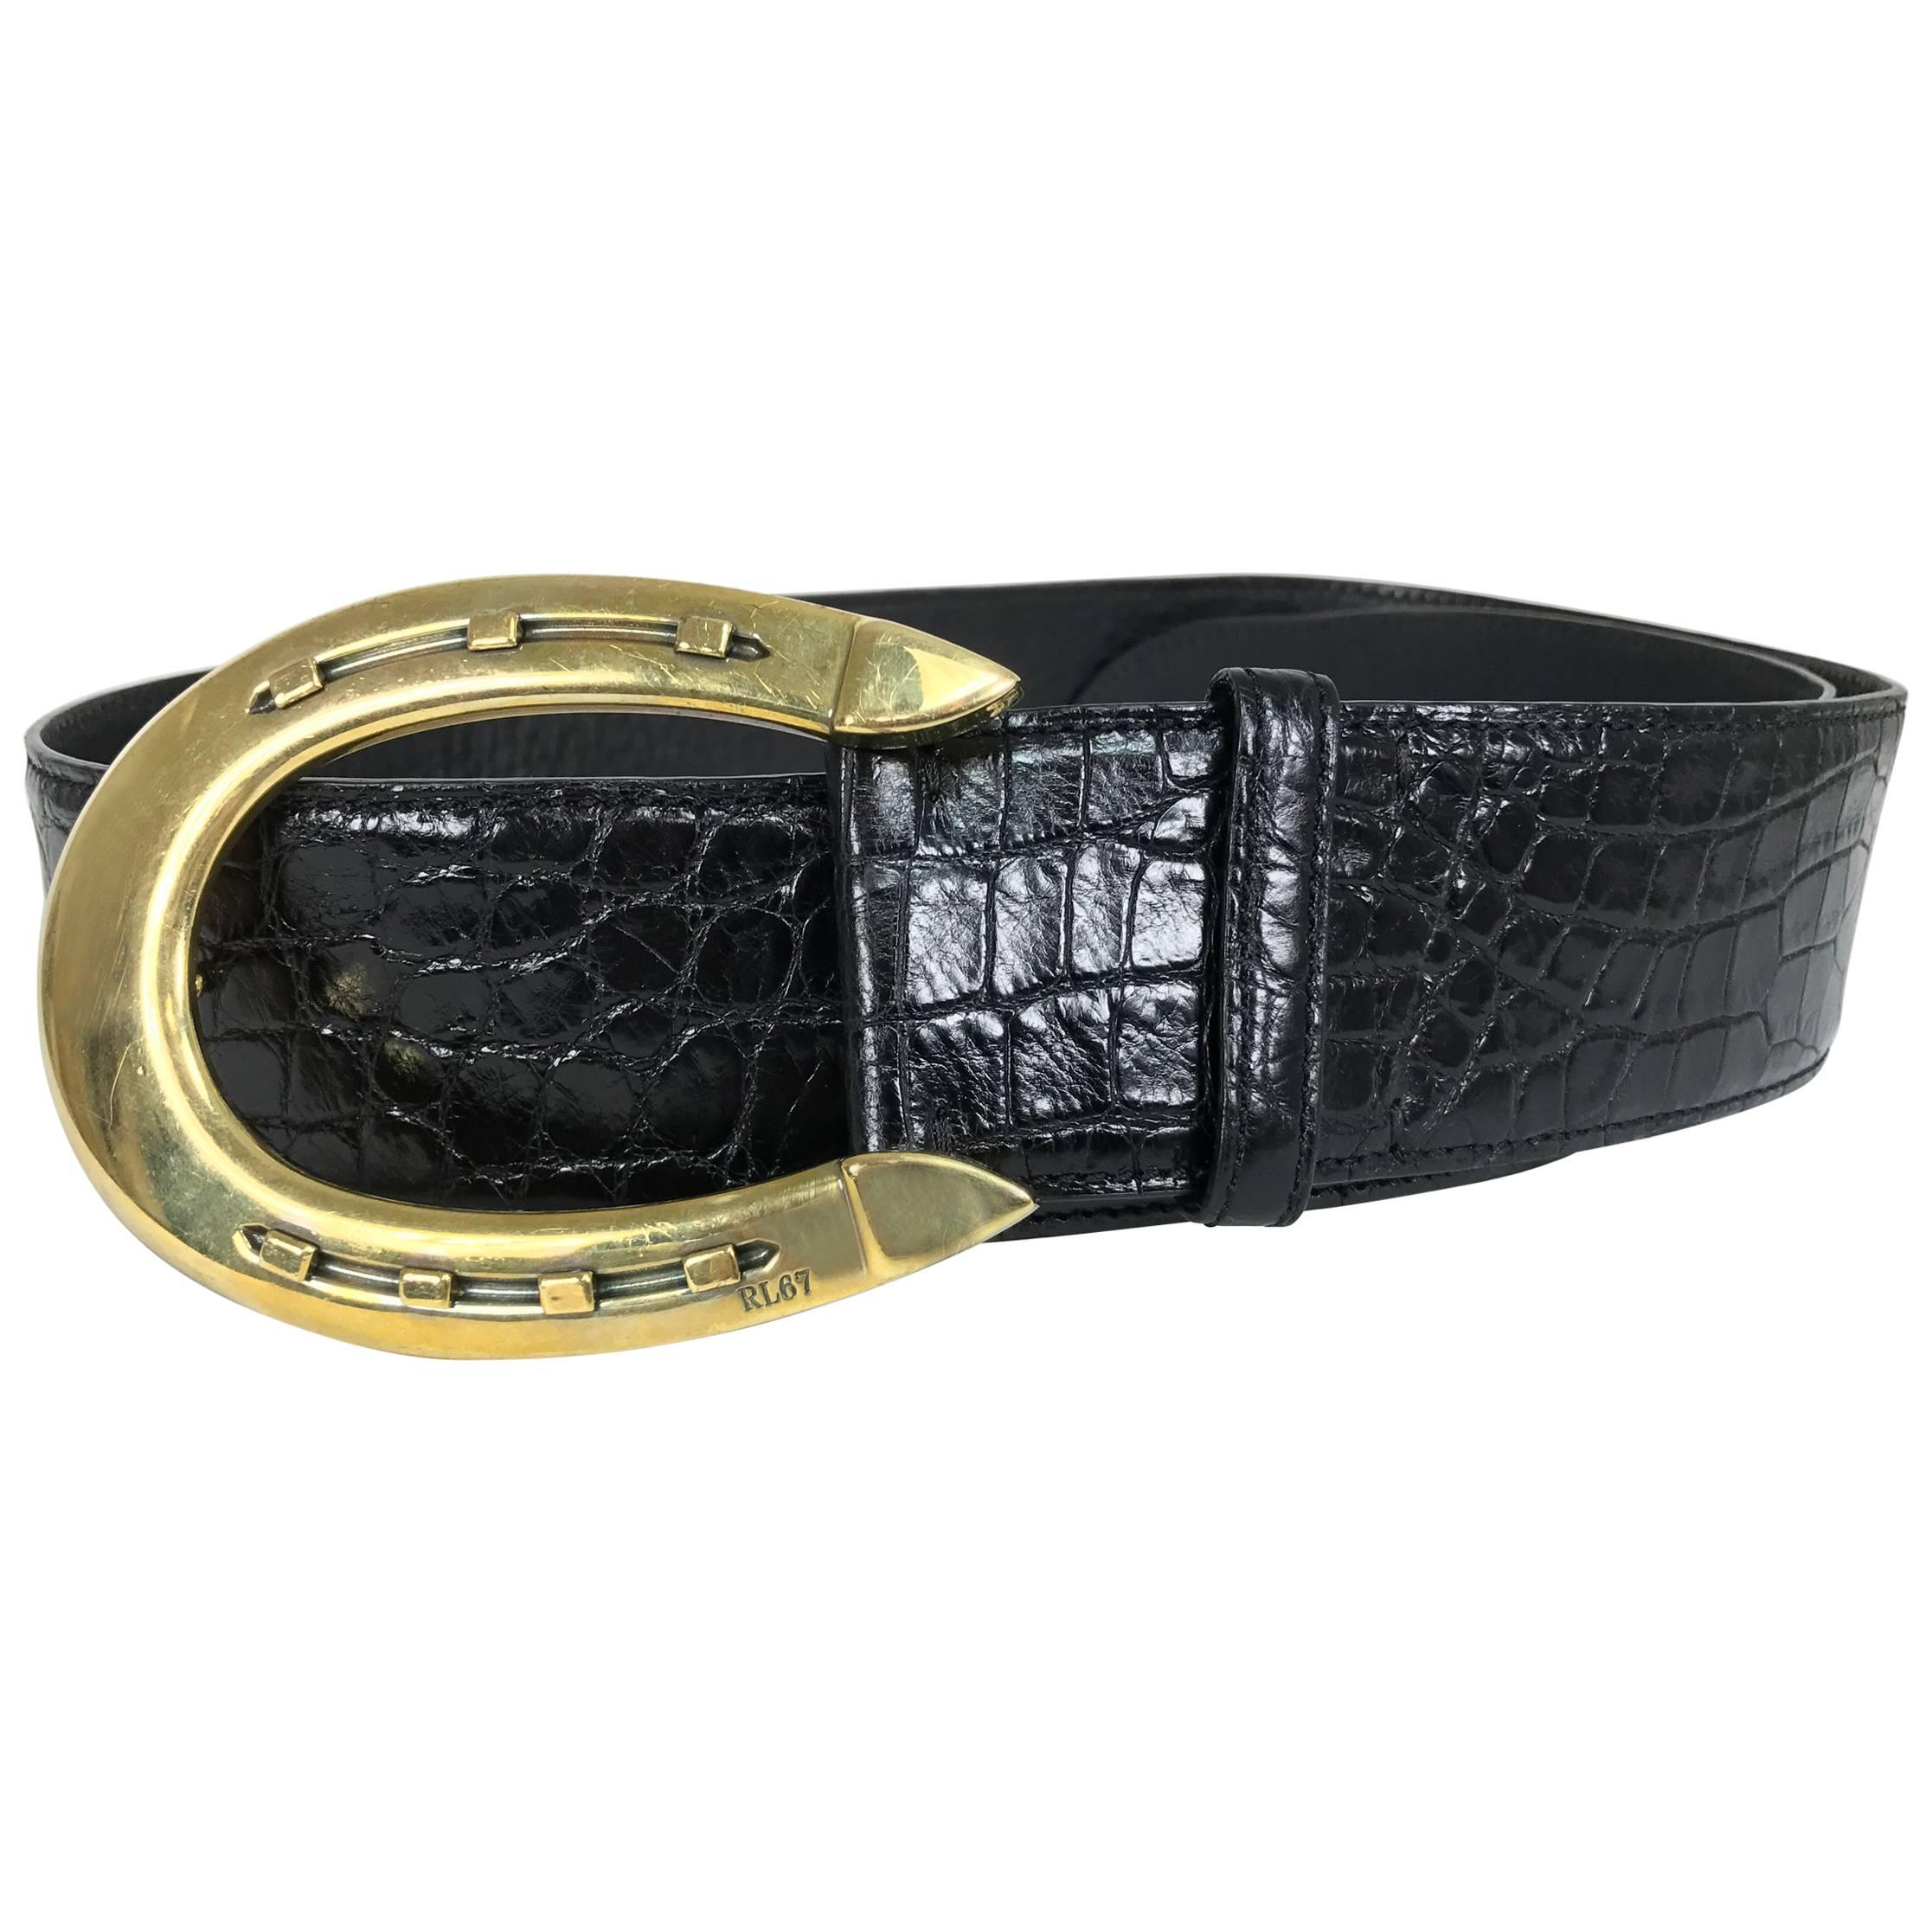 Ralph Lauren glazed black alligator belt with heavy gold horseshoe buckle